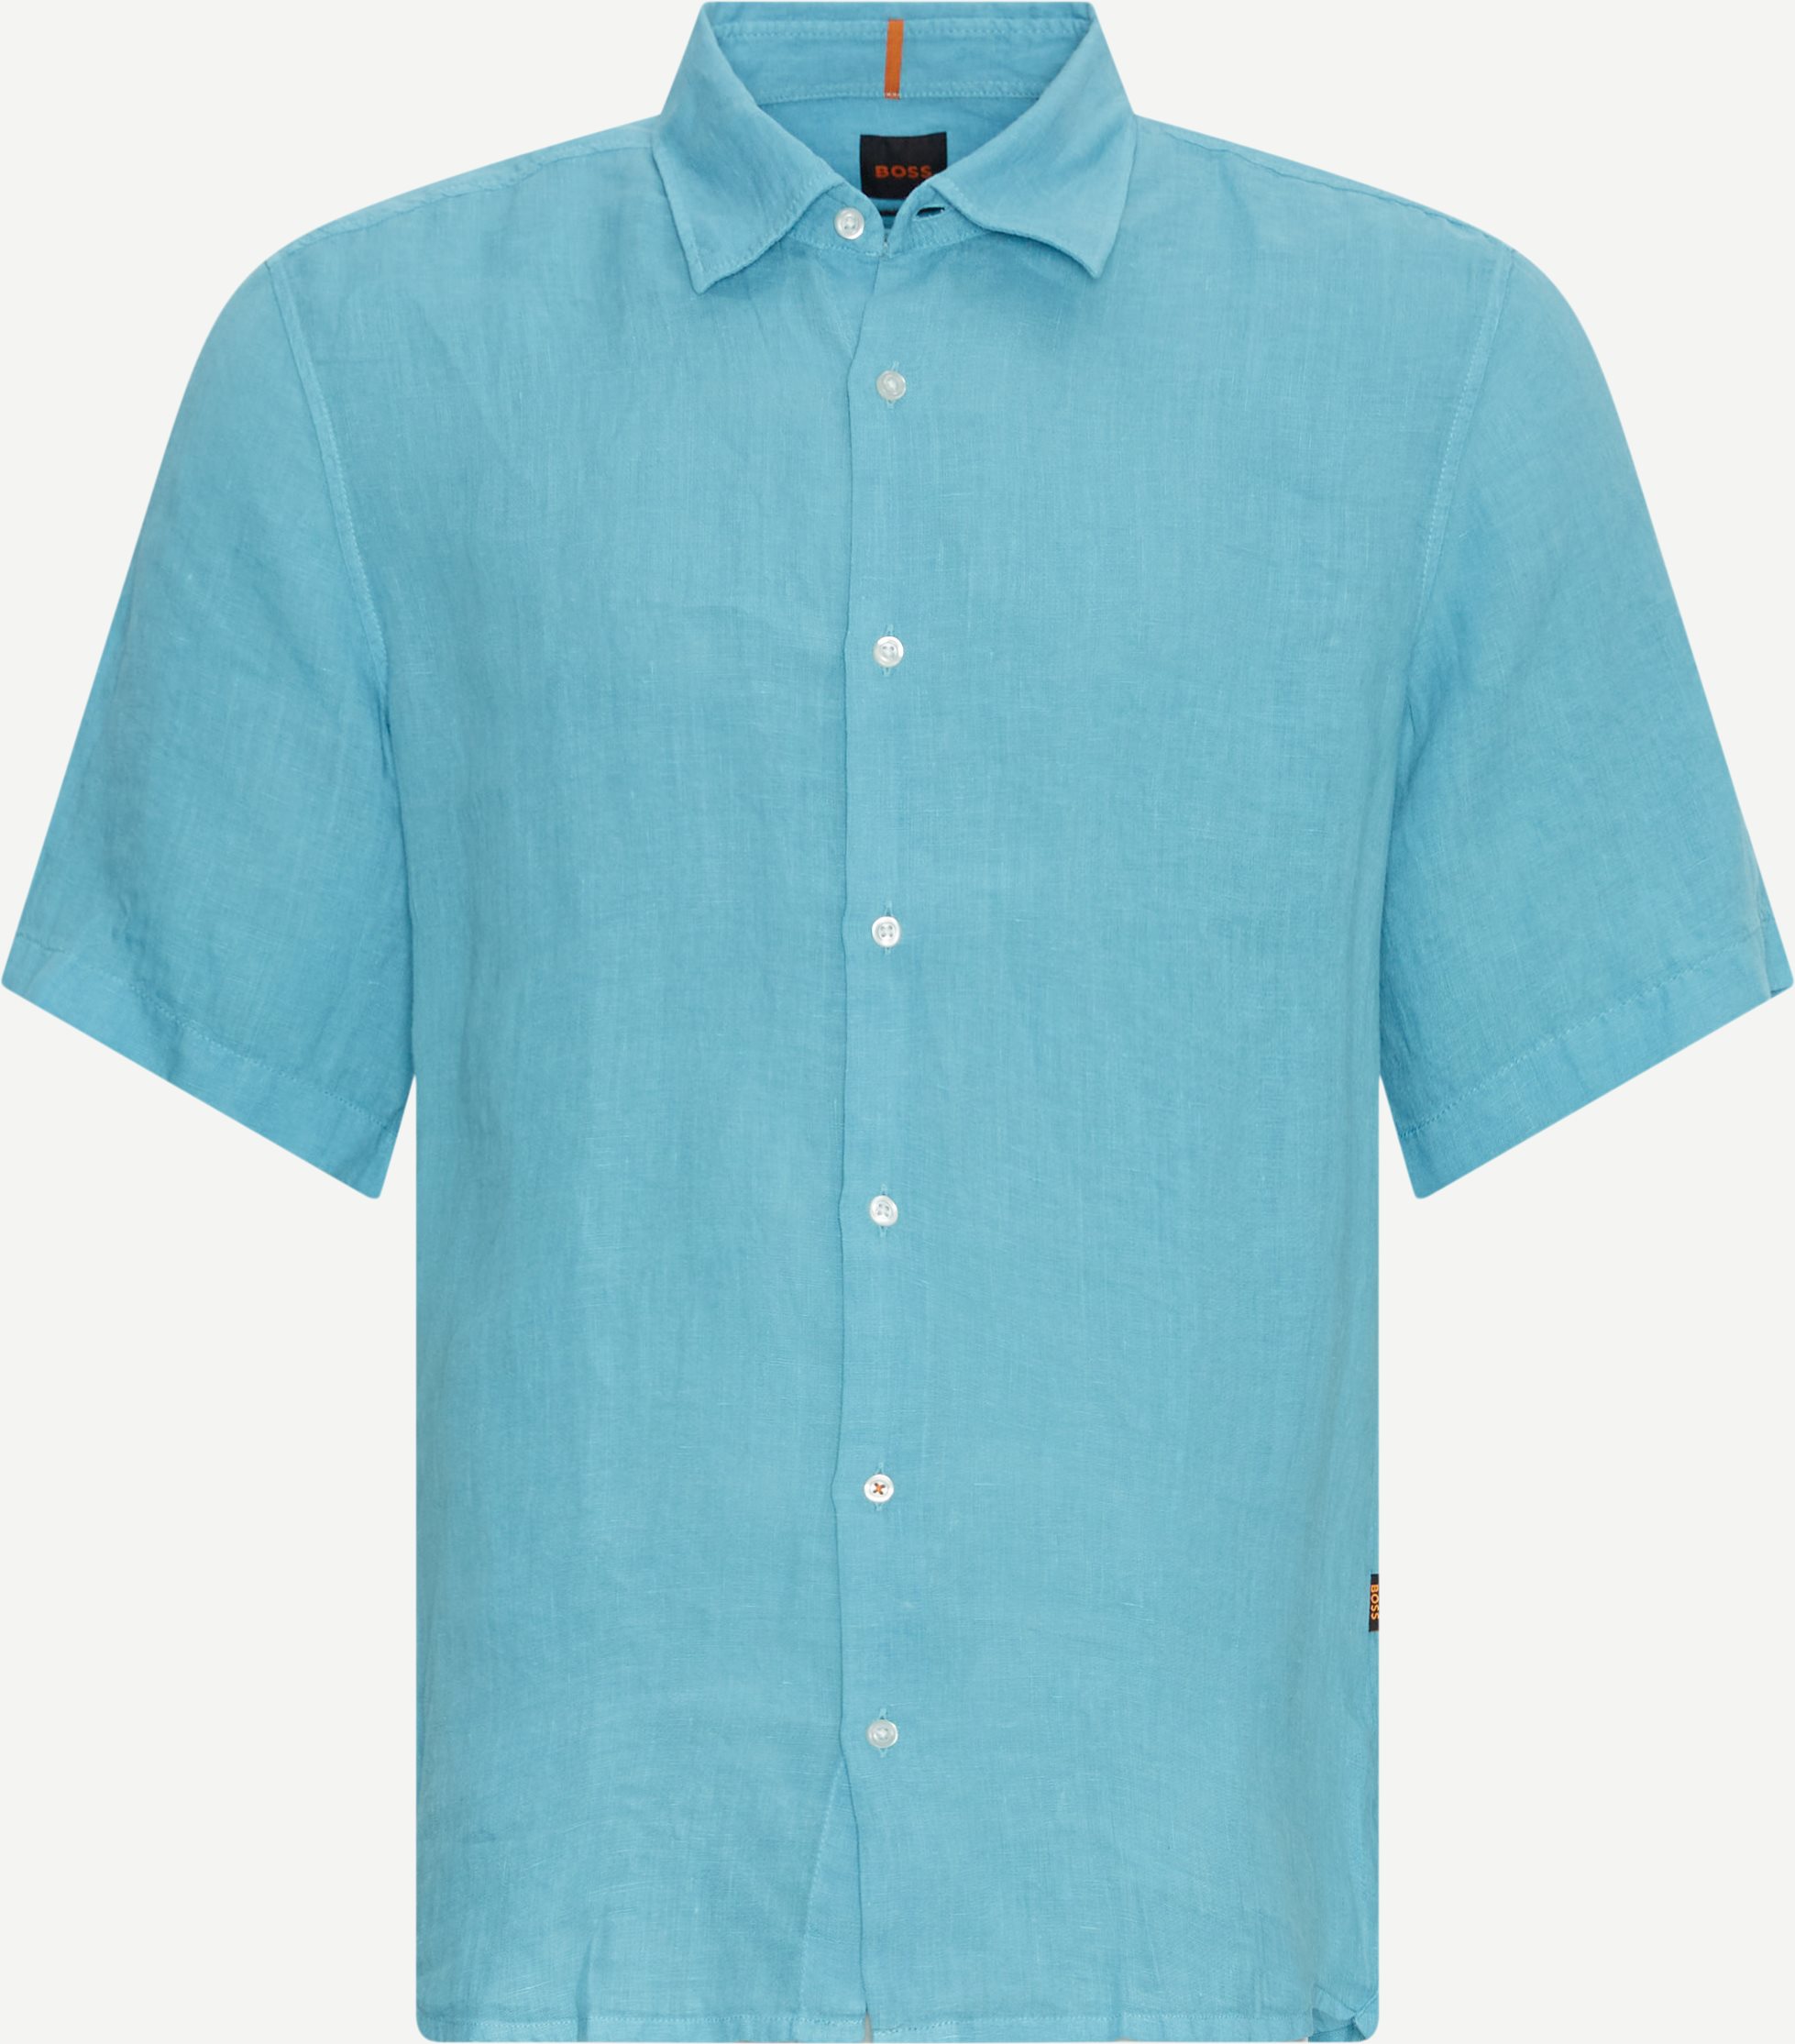 BOSS Casual Short-sleeved shirts 50489345 RASH_2 Turquoise